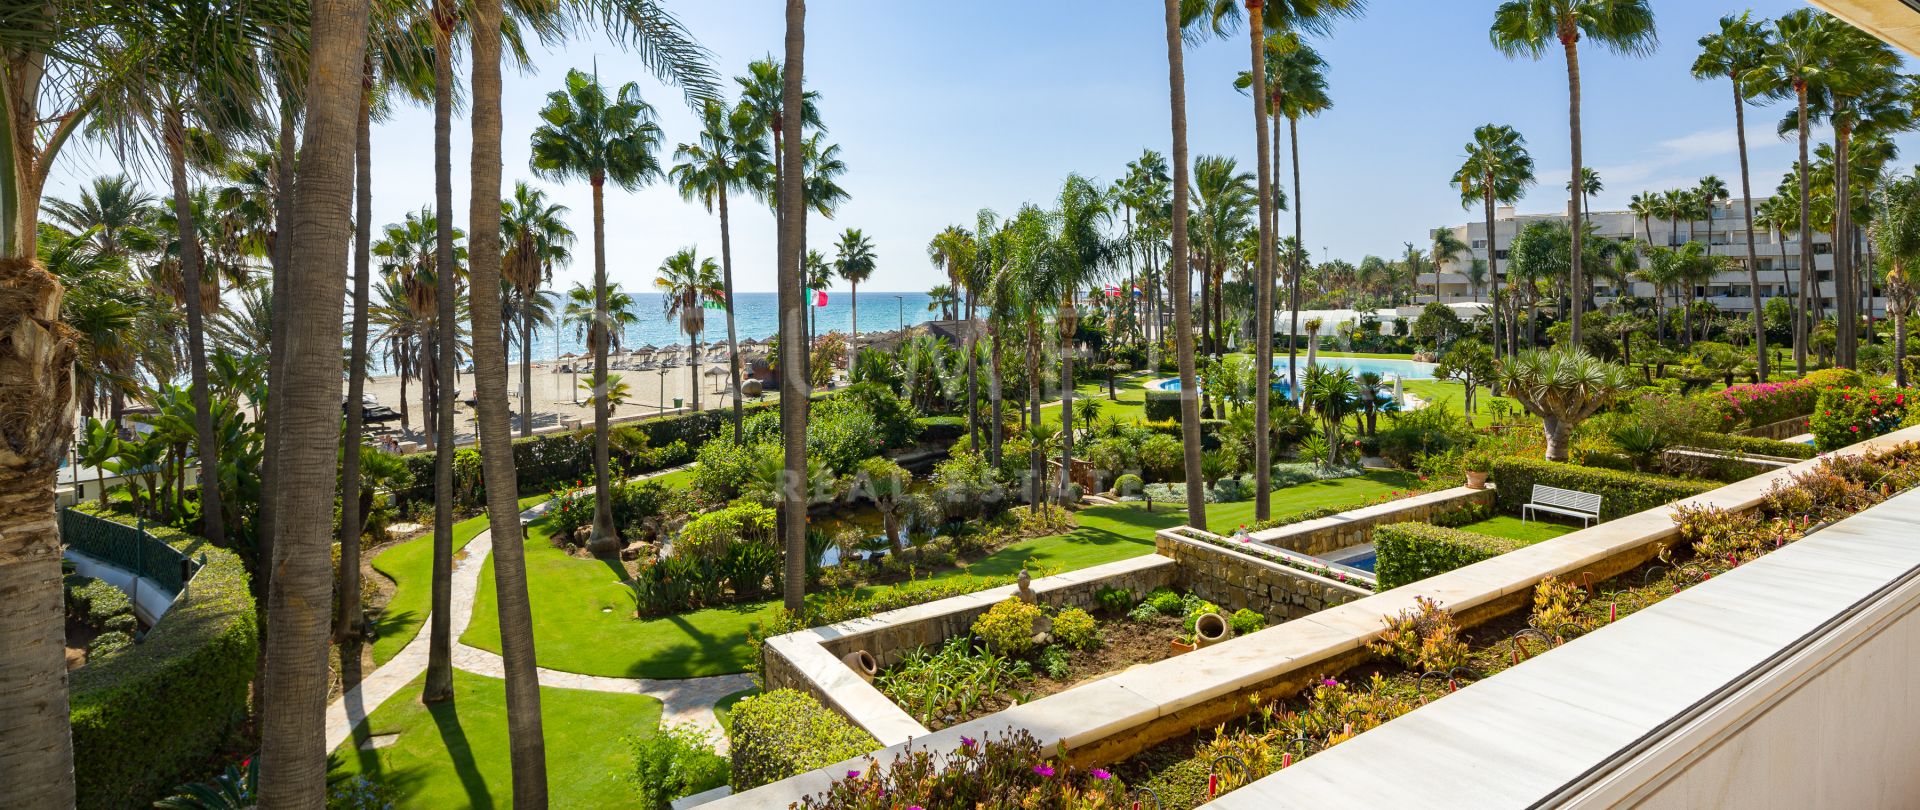 Fabelhaftes modernes Luxus-Apartment am Meer mit Panoramablick in Los Granados, Puerto Banús